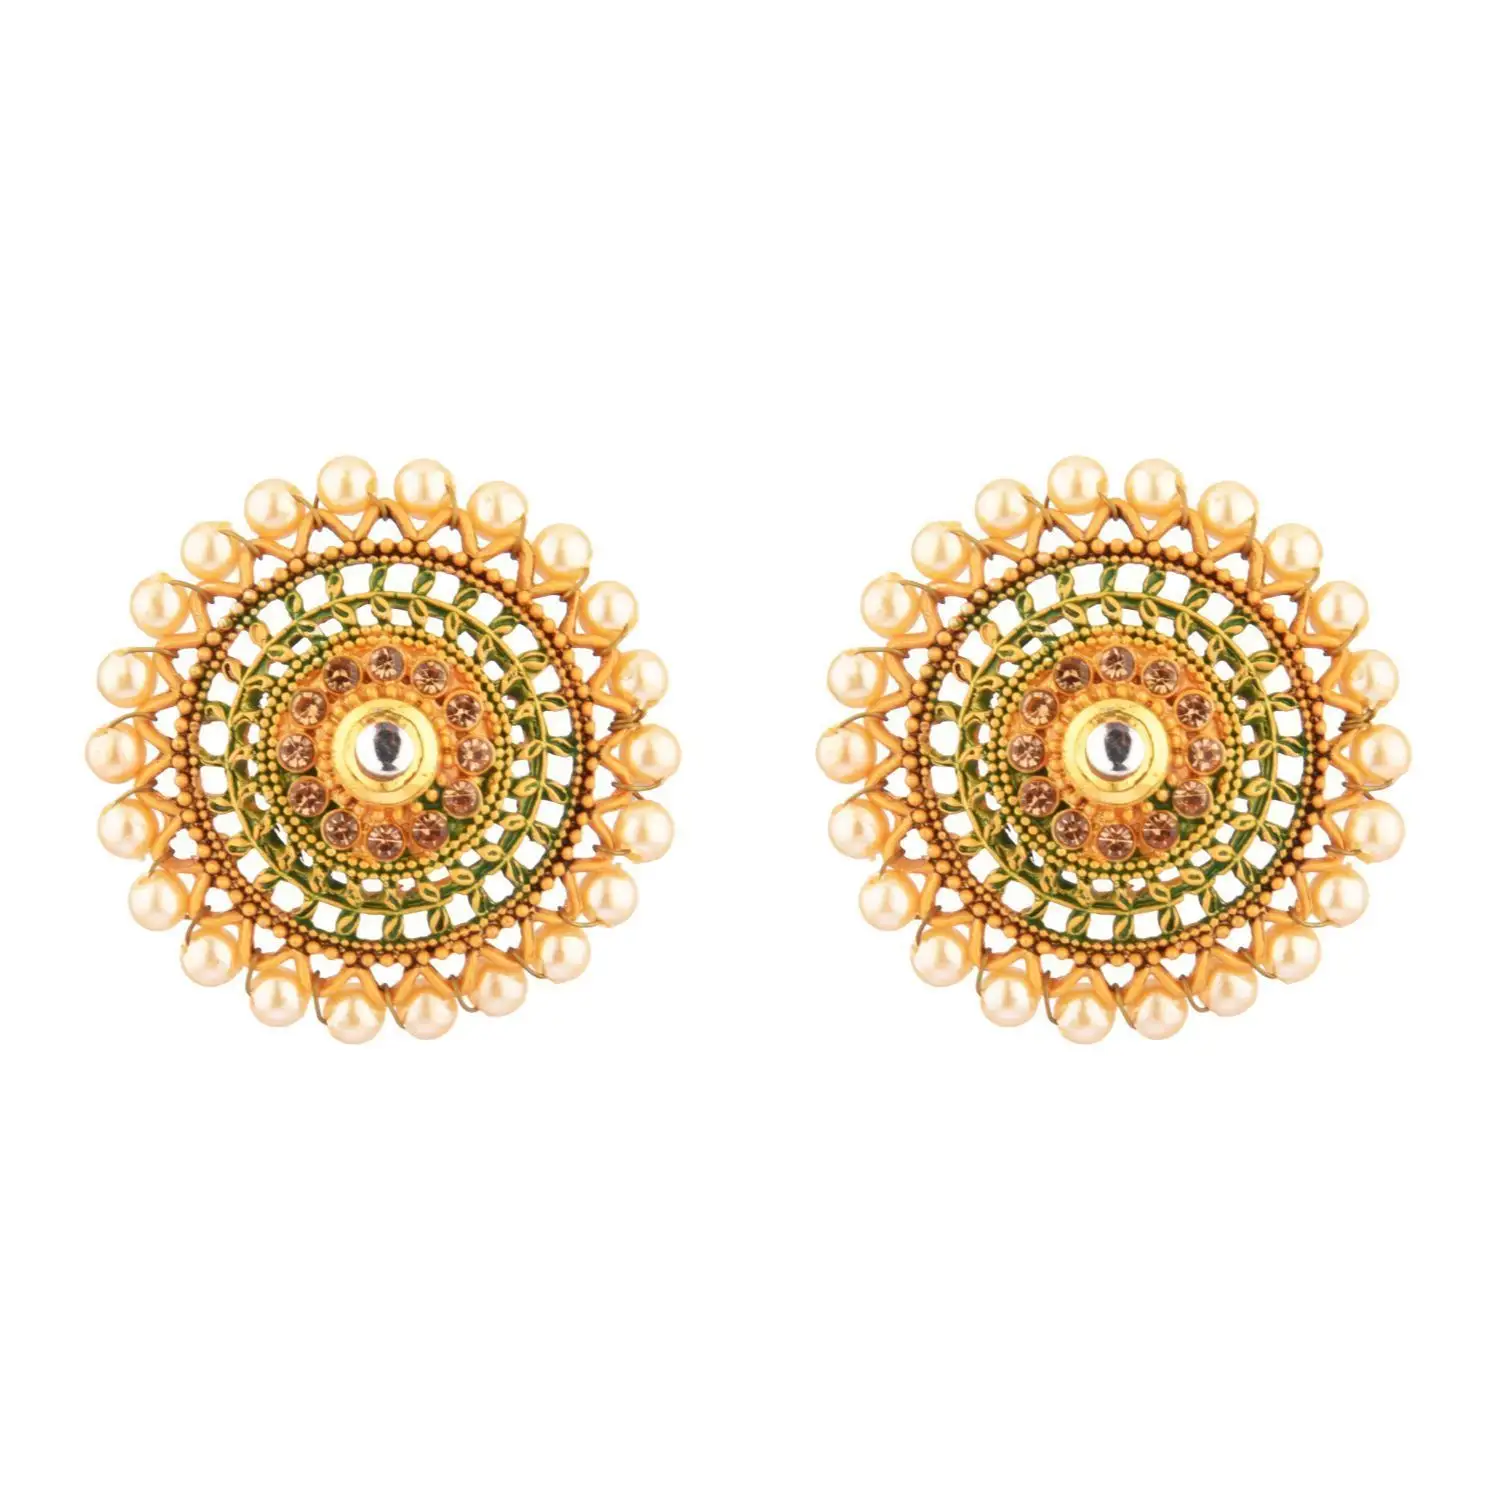 Anting Kundan India Perhiasan Kristal Mutiara Imitasi Antik Anting Kancing Bulat Besar Perhiasan untuk Wanita, Hijau